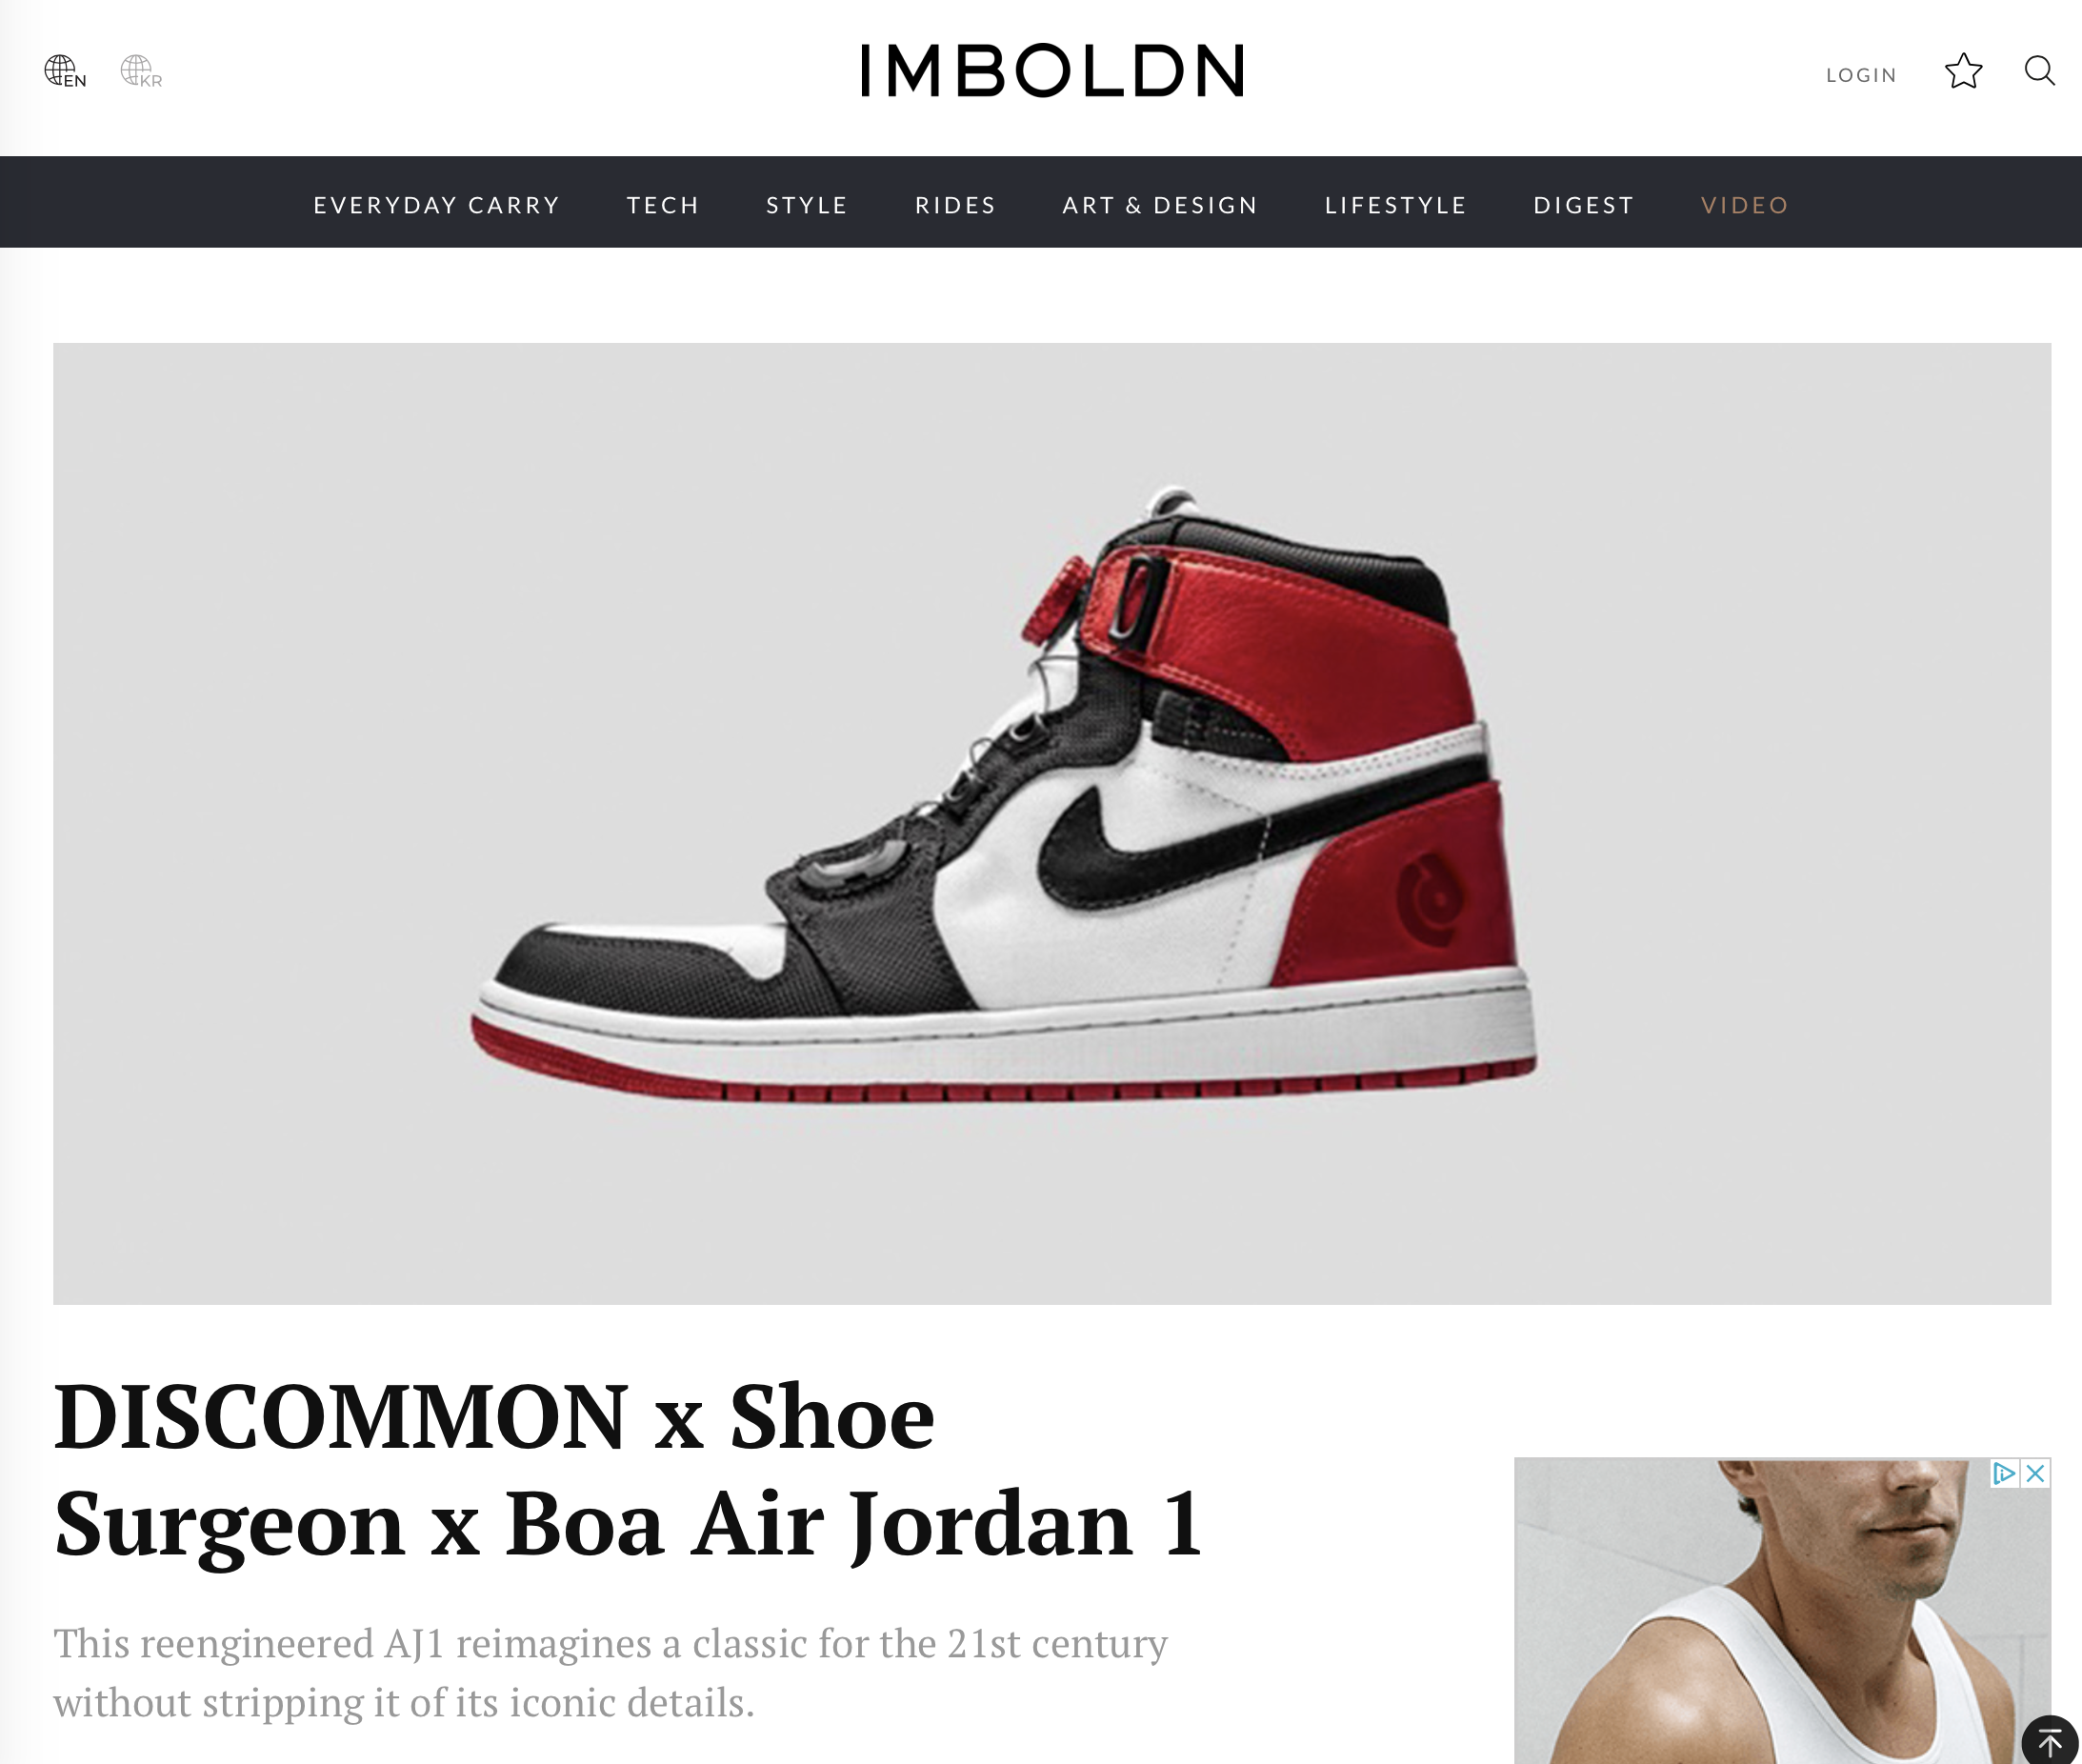 Discommon air Jordan 1 shoe feature